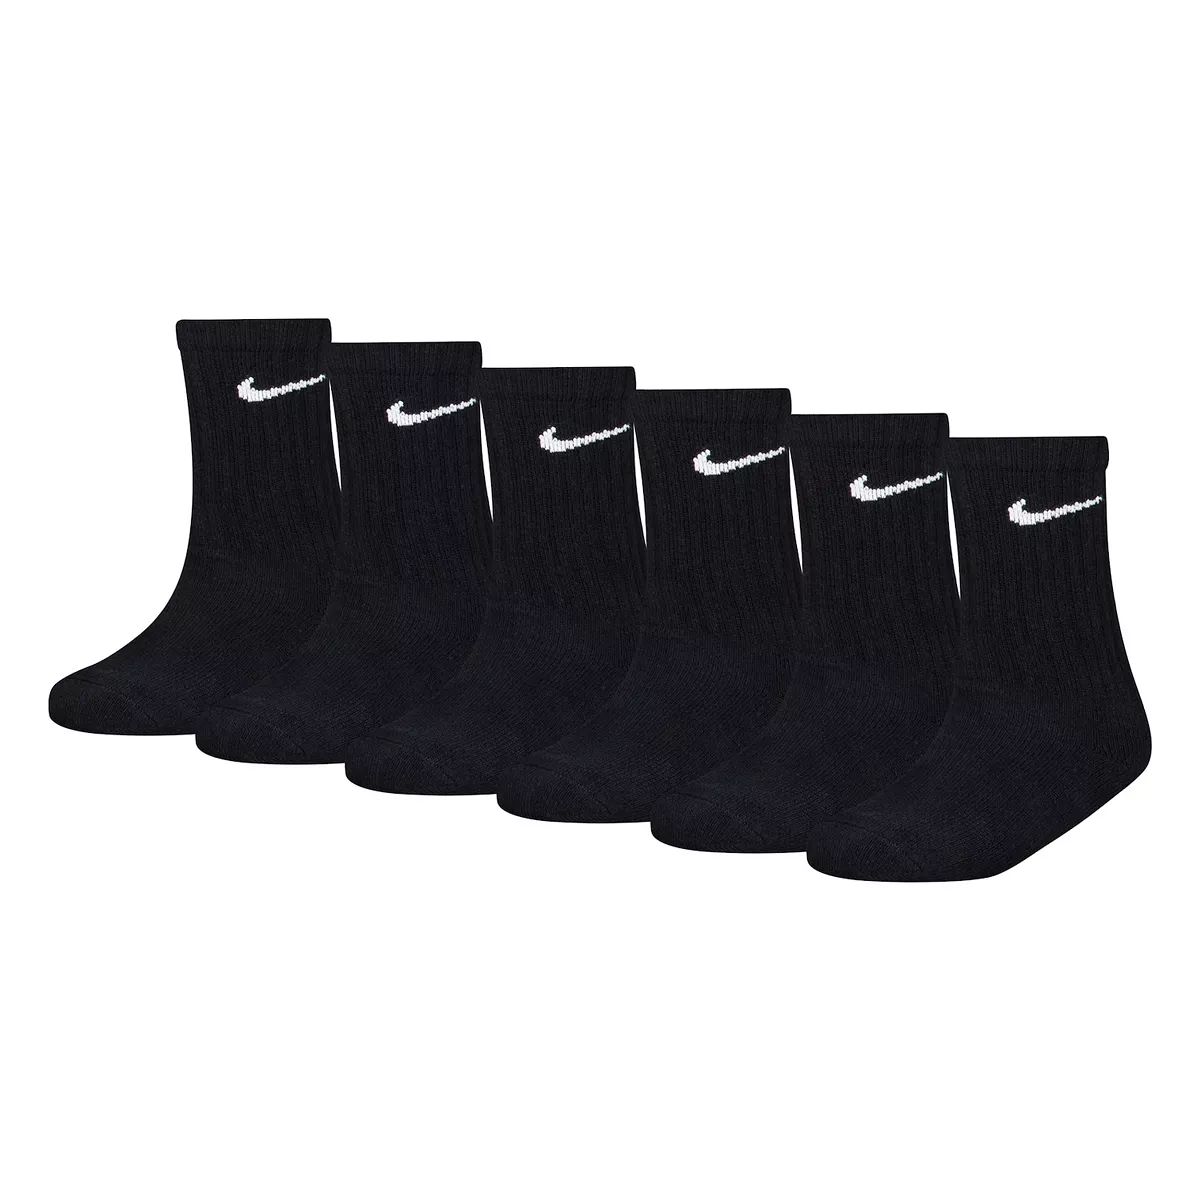 Boys Nike 6-Pack Performance Crew Socks | Kohl's